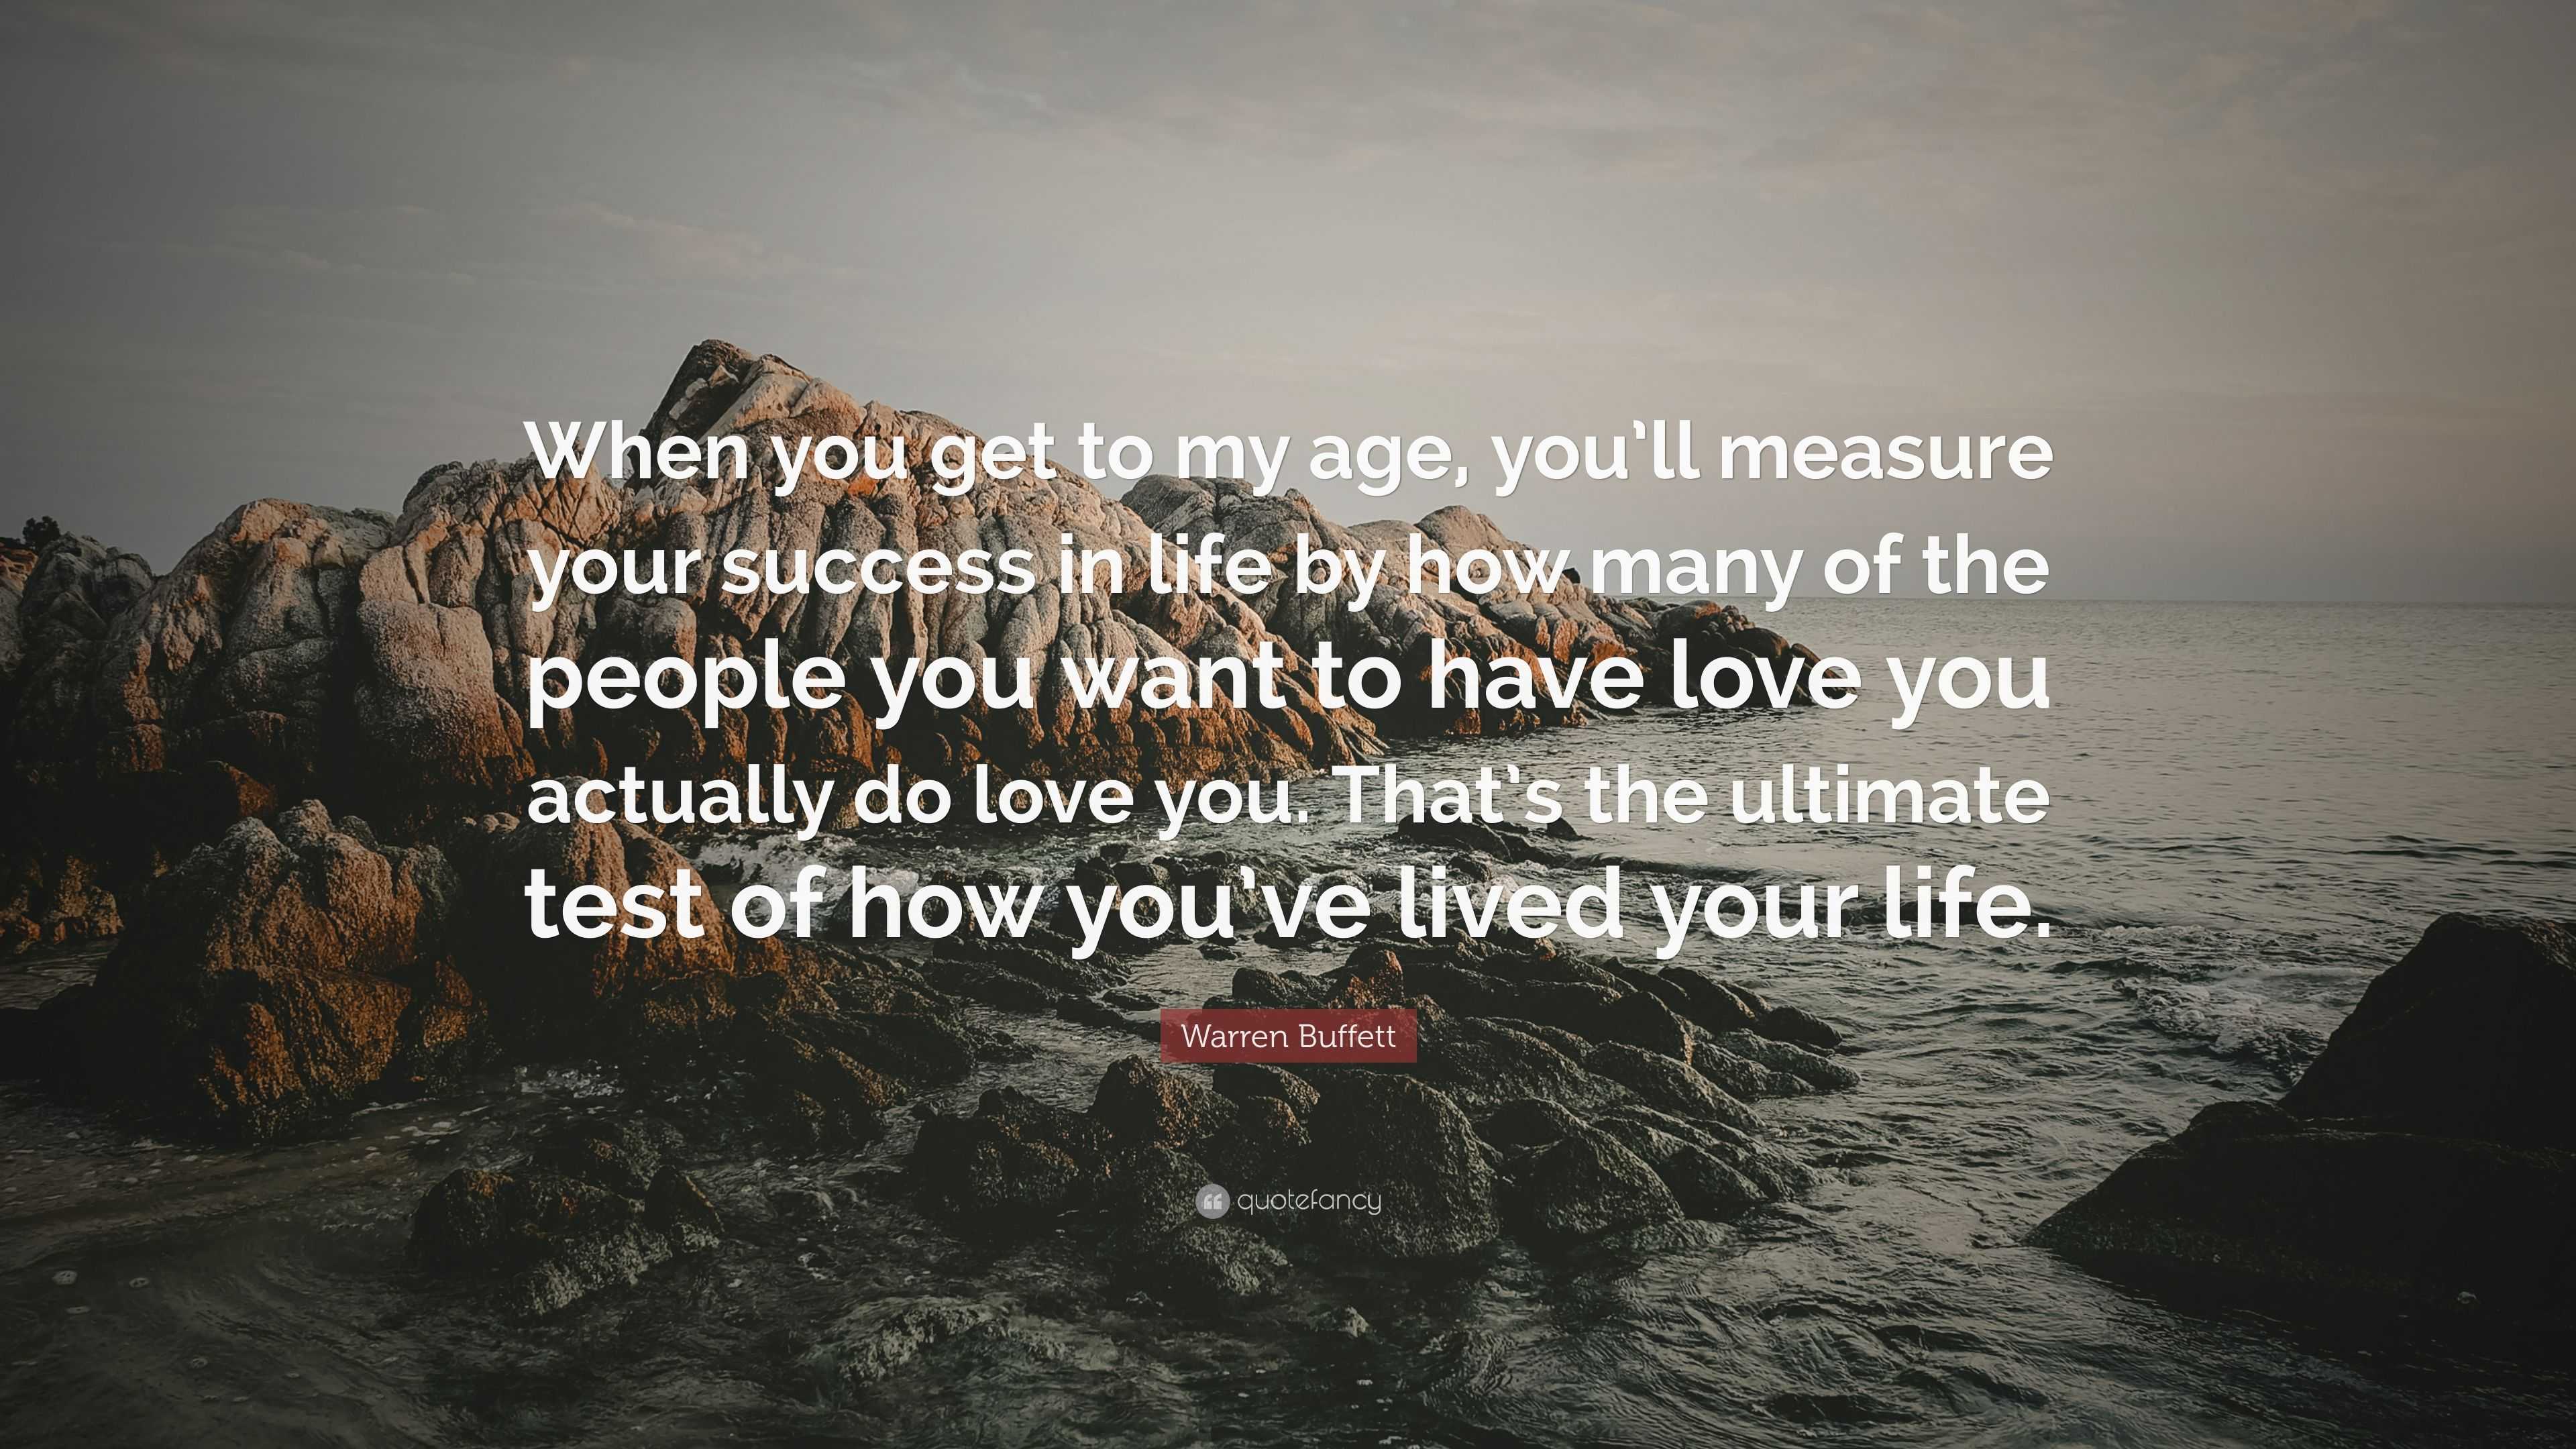 Warren Buffett Quote “When you to my age you ll measure